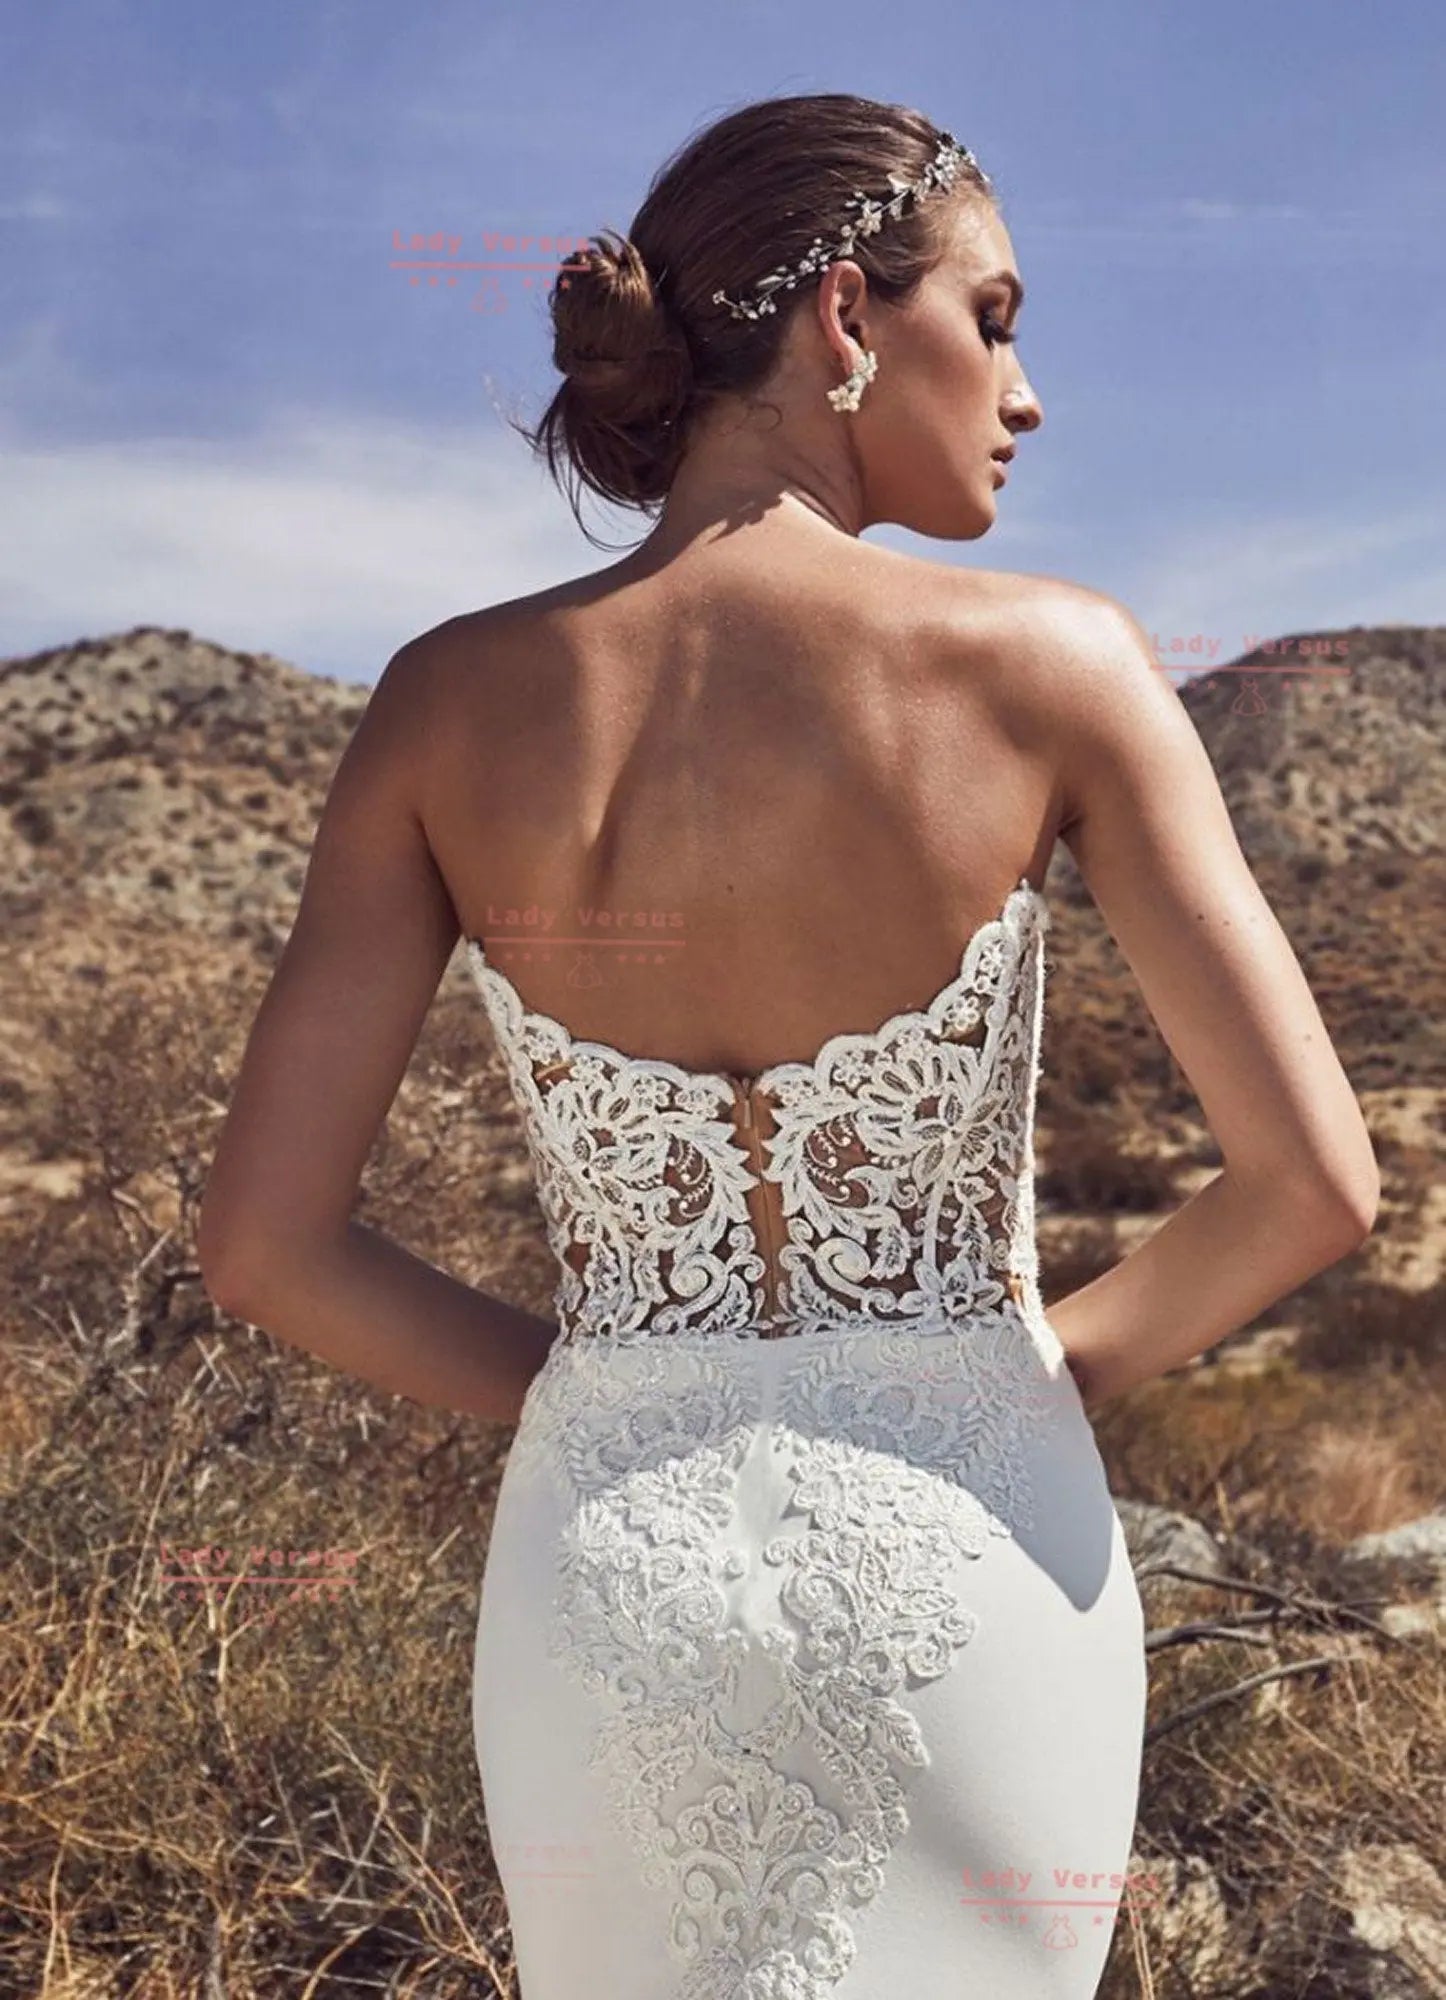 Bohemian elegant Lace Wedding  Dress /Beach wedding dress /bridal gown/ bohemian lace dress/ long double trail Lady Versus